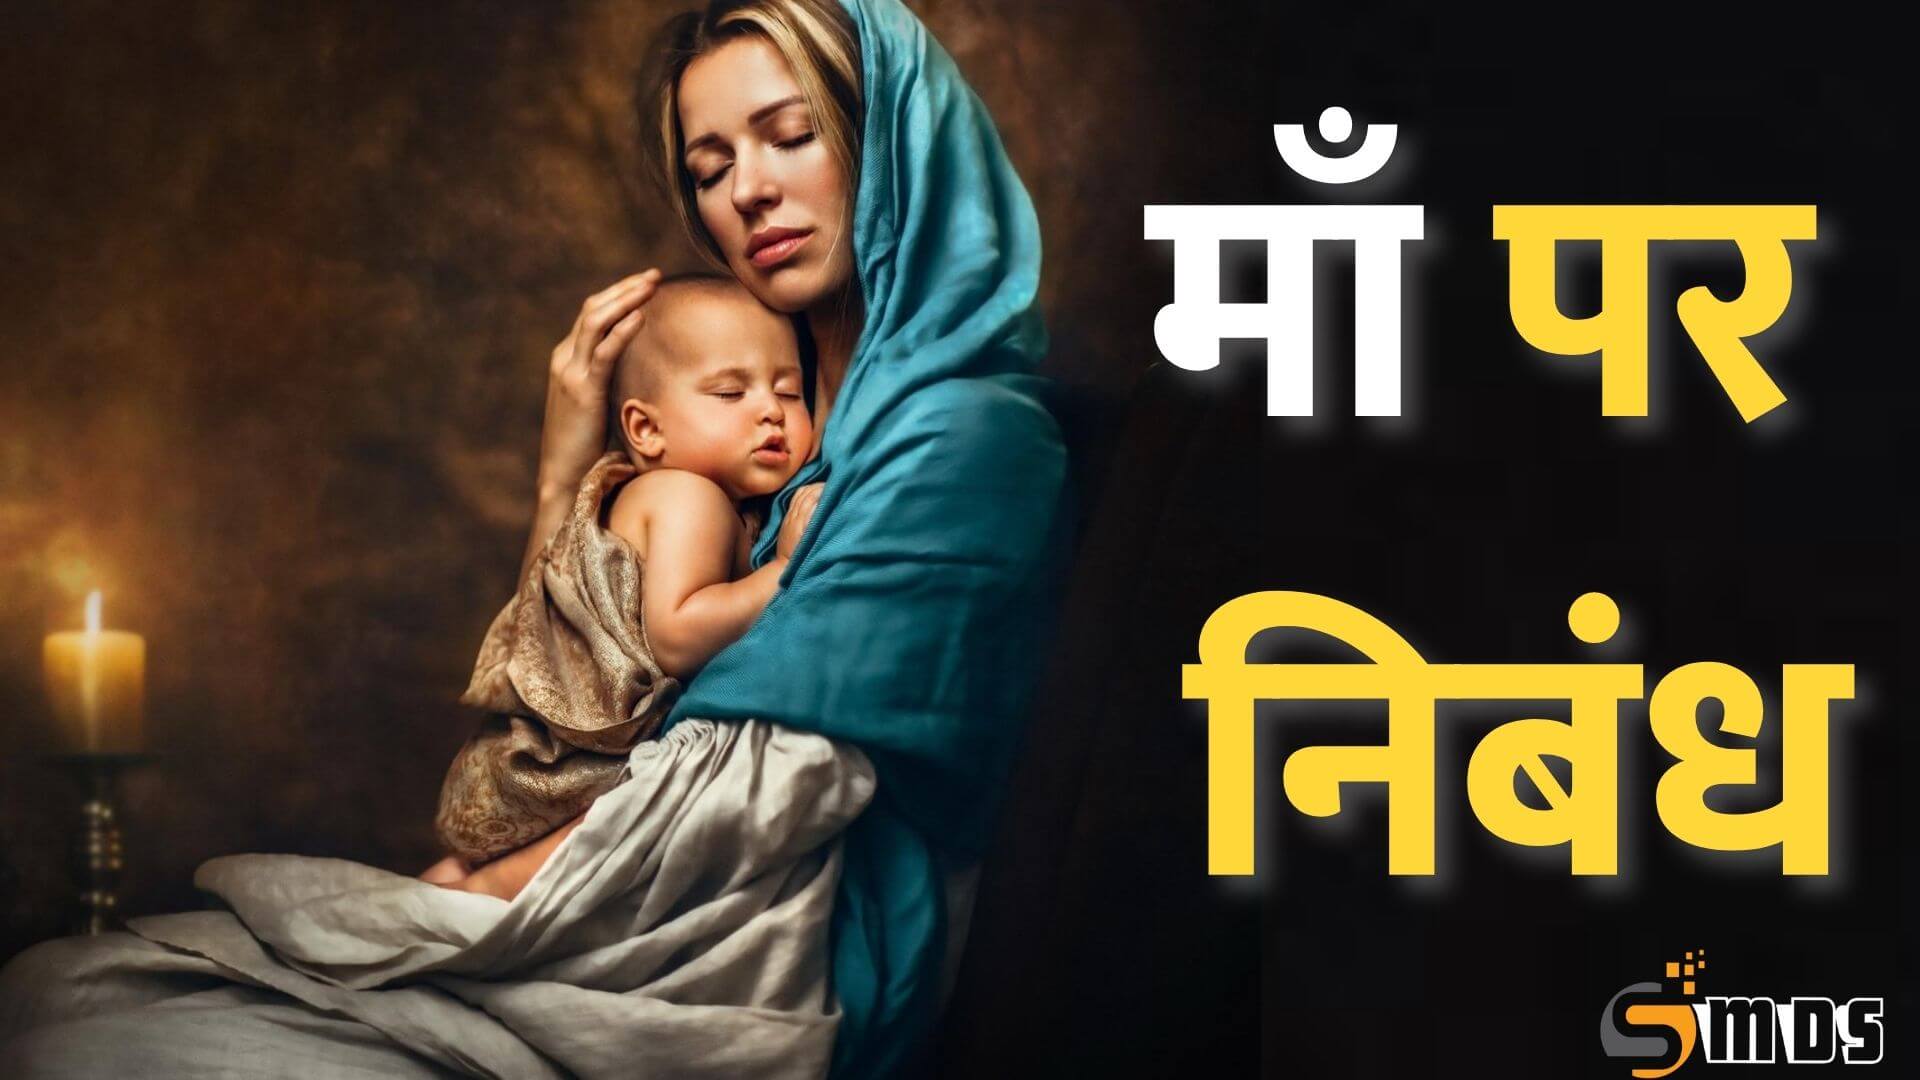 माँ पर निबंध हिंदी में, essay on mother in hindi, essay on maa, meri maa par nibandh, maa ka mahatva